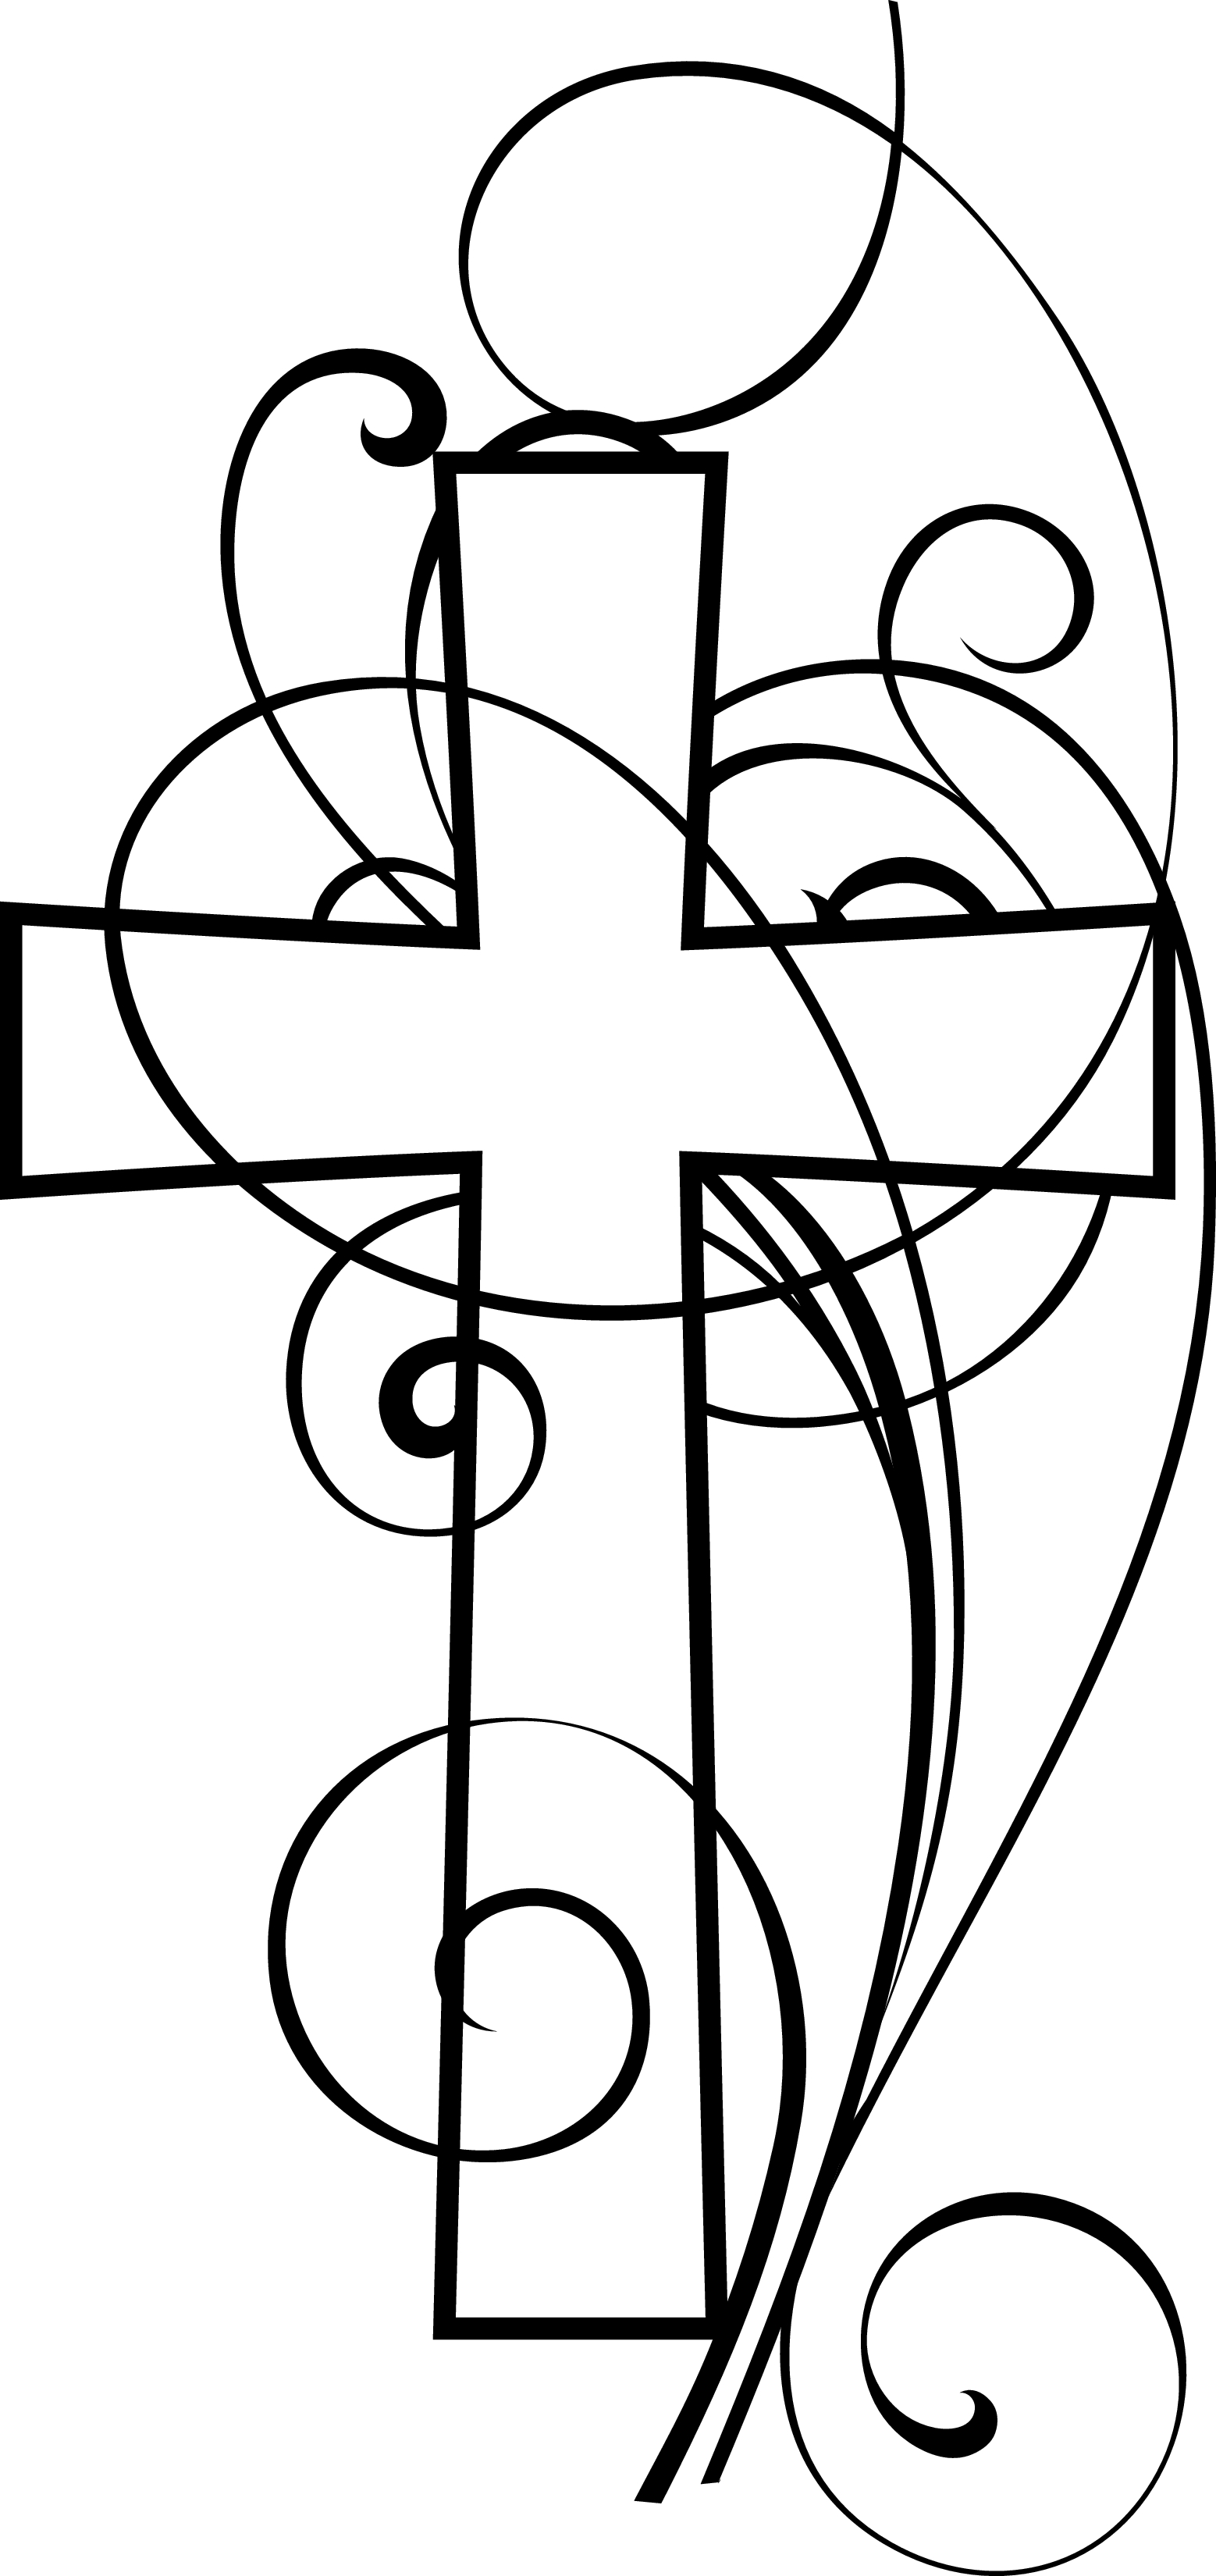 christian cliparts u0026middo - Free Cross Images Clip Art